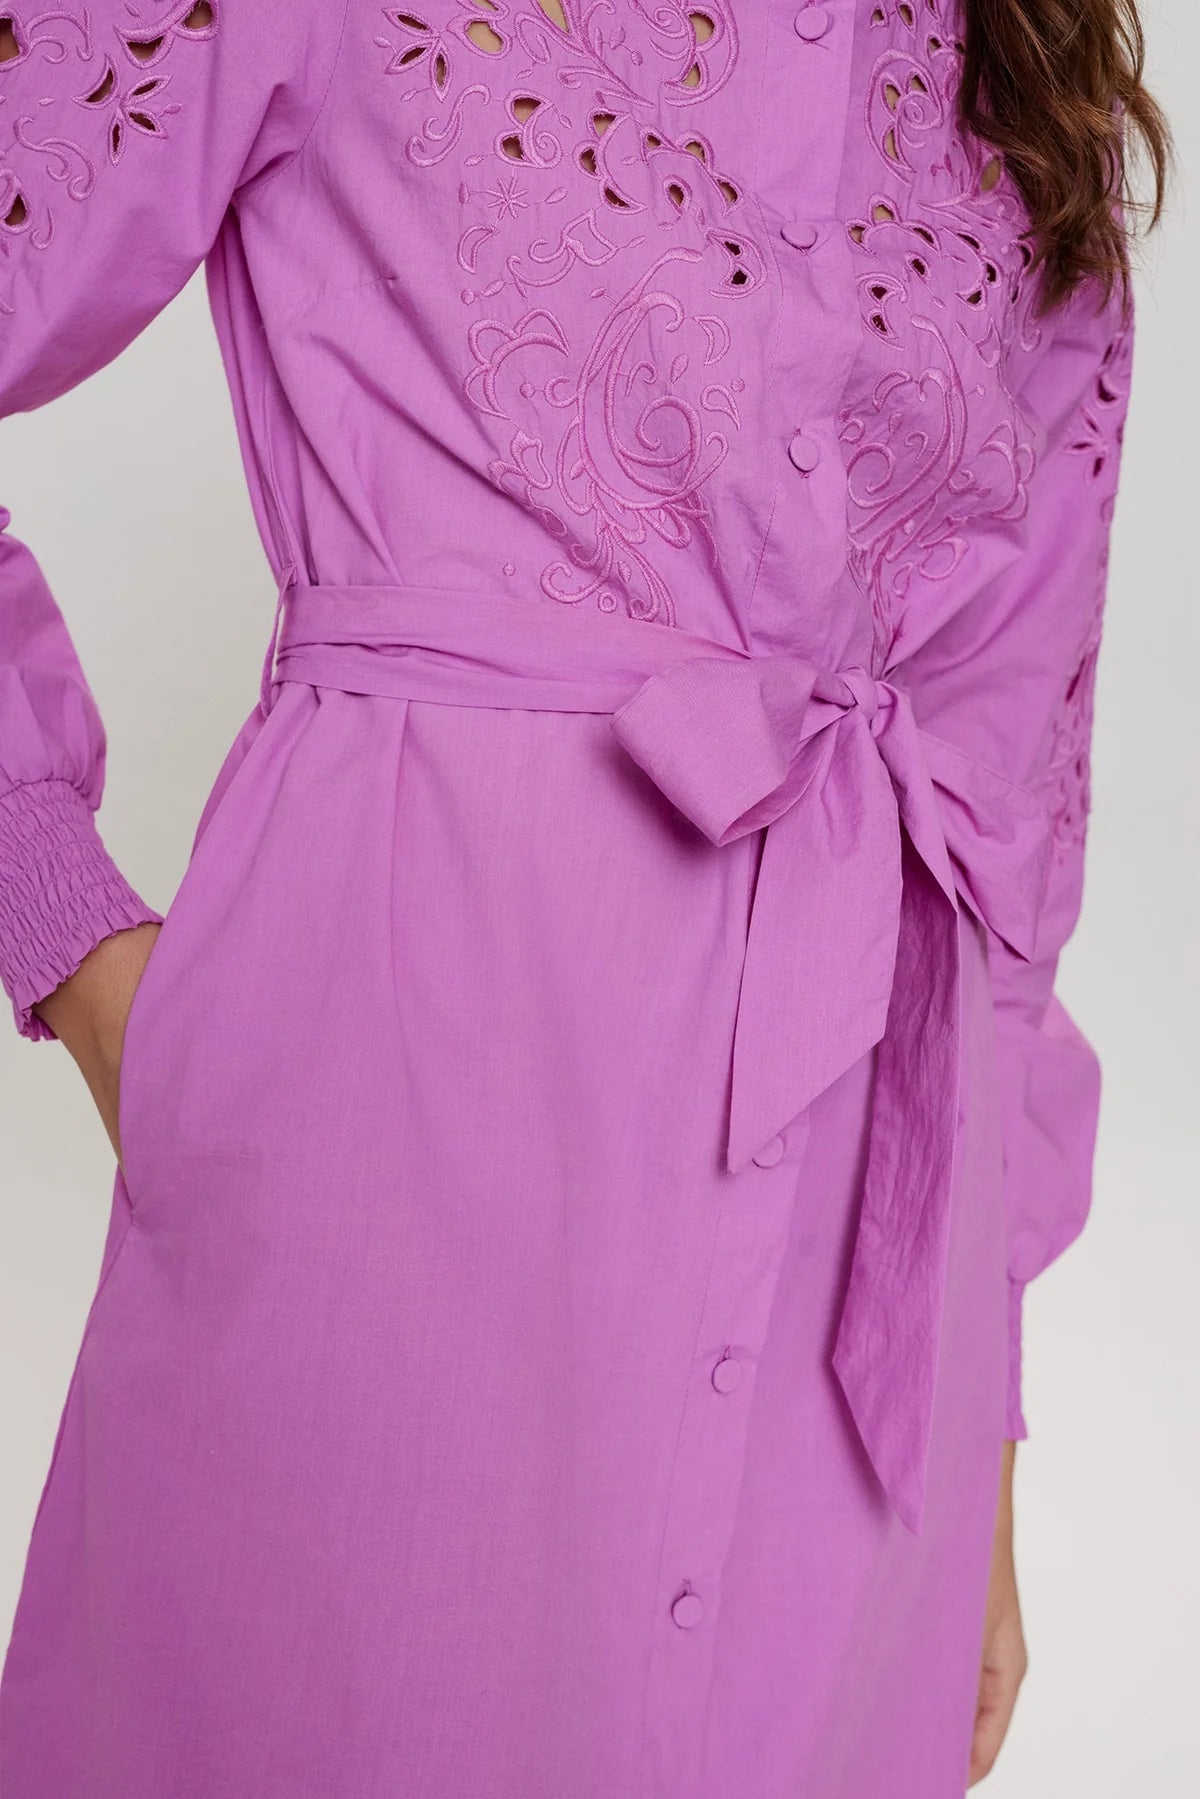 Nulima dress pink blouse